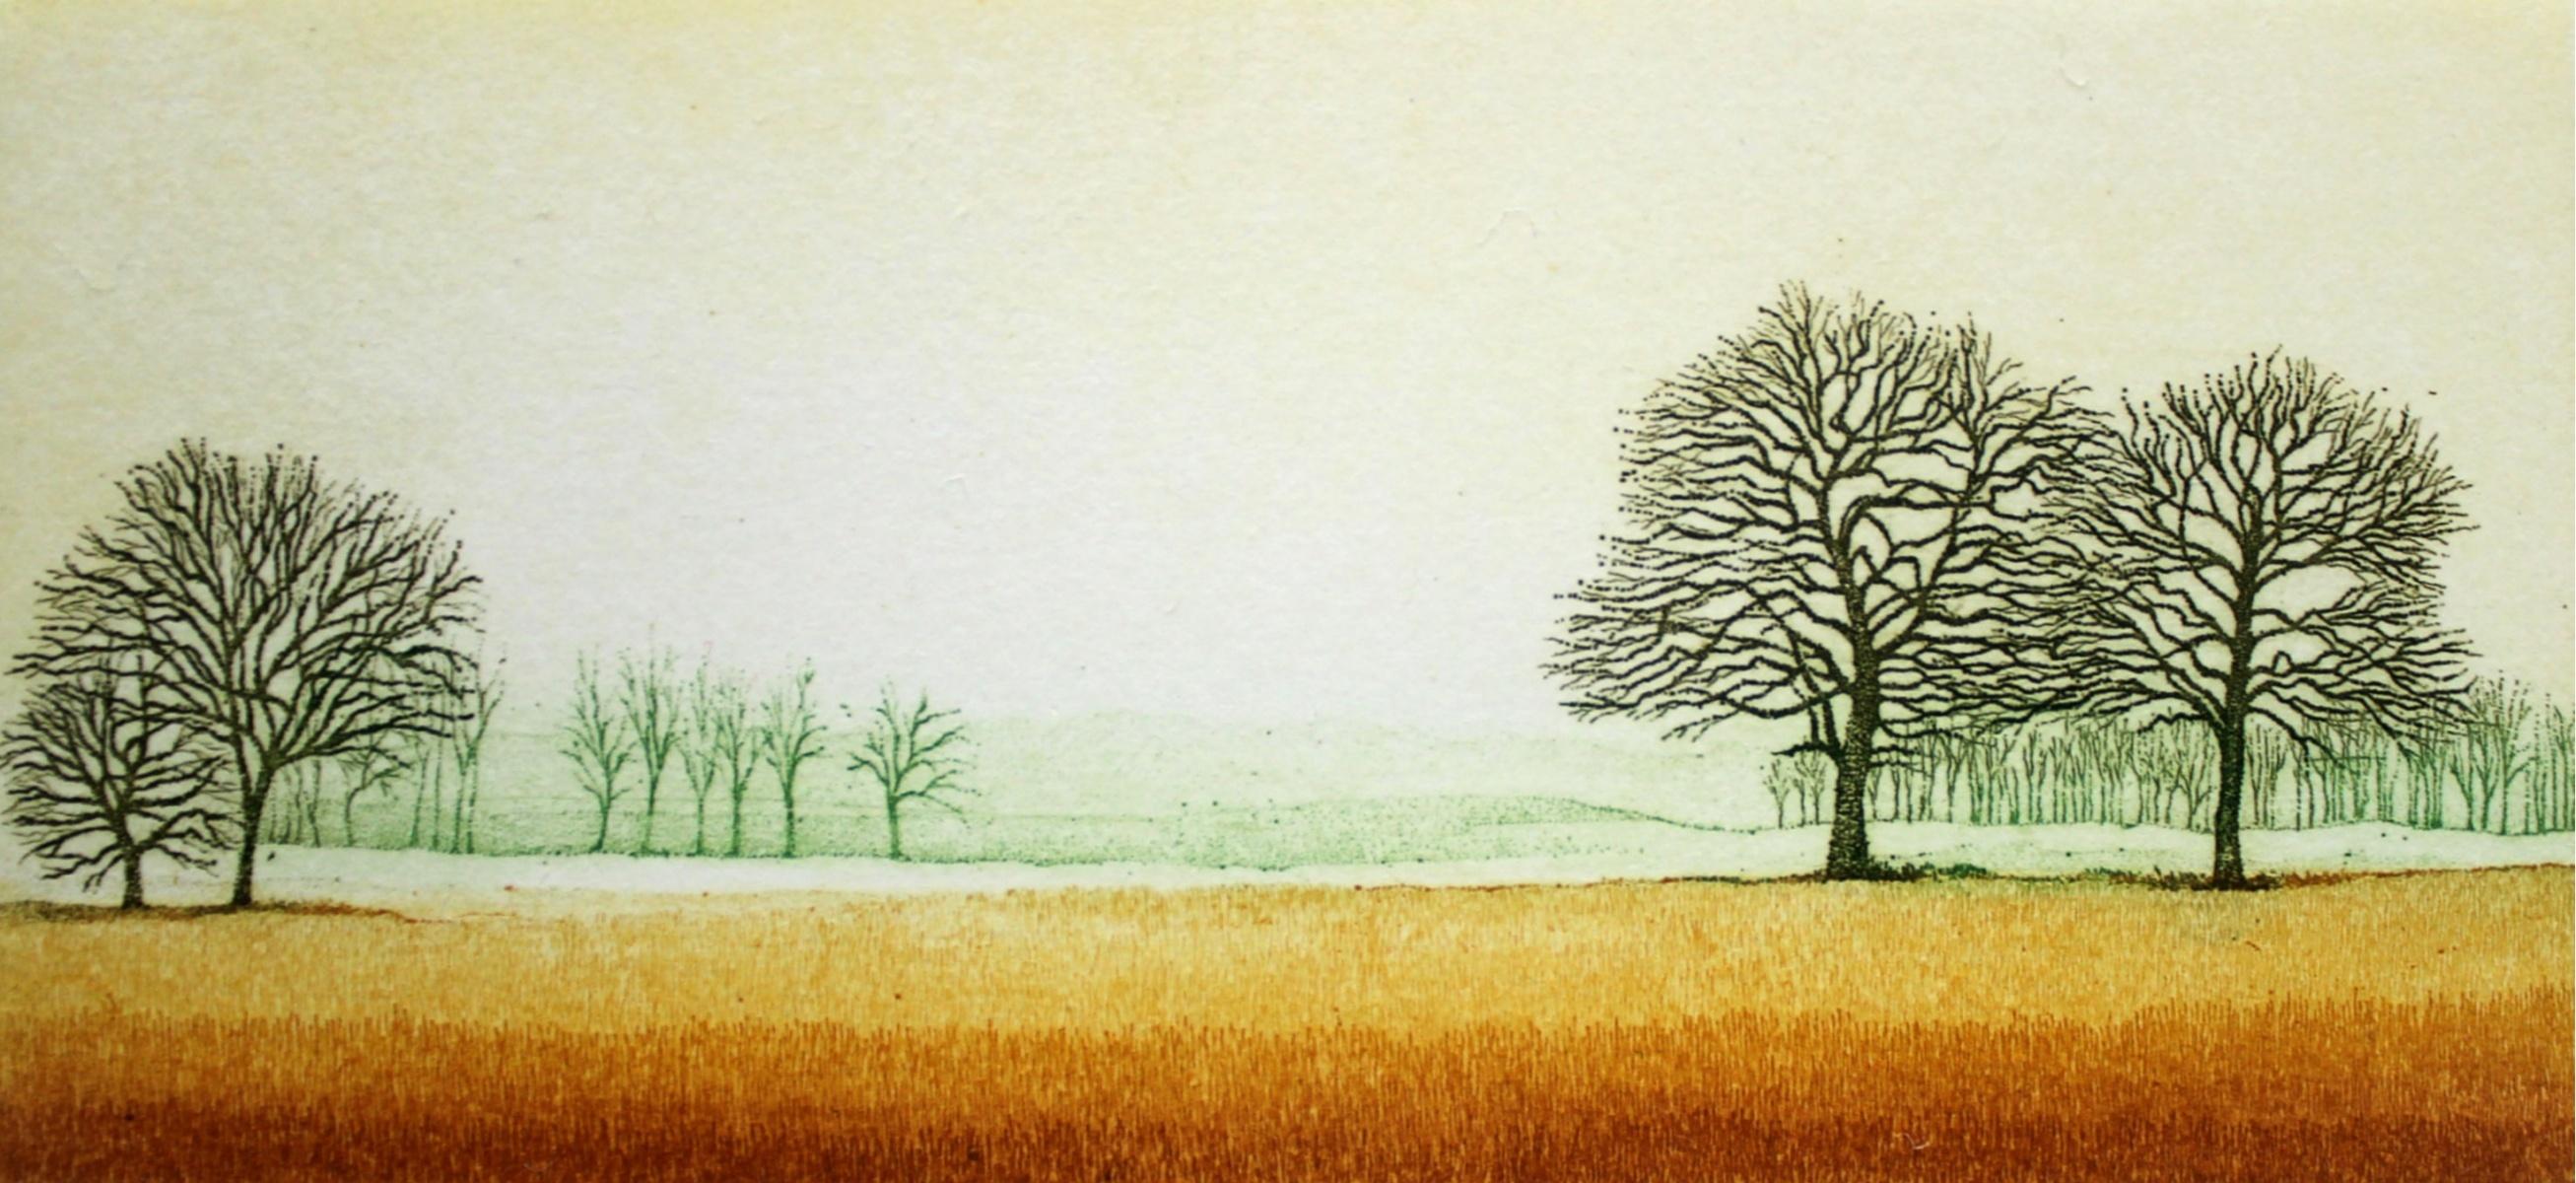 Elżbieta Bocianowska Figurative Print - A distance. Landscape figurative print, Miniature, Trees, Polish artist